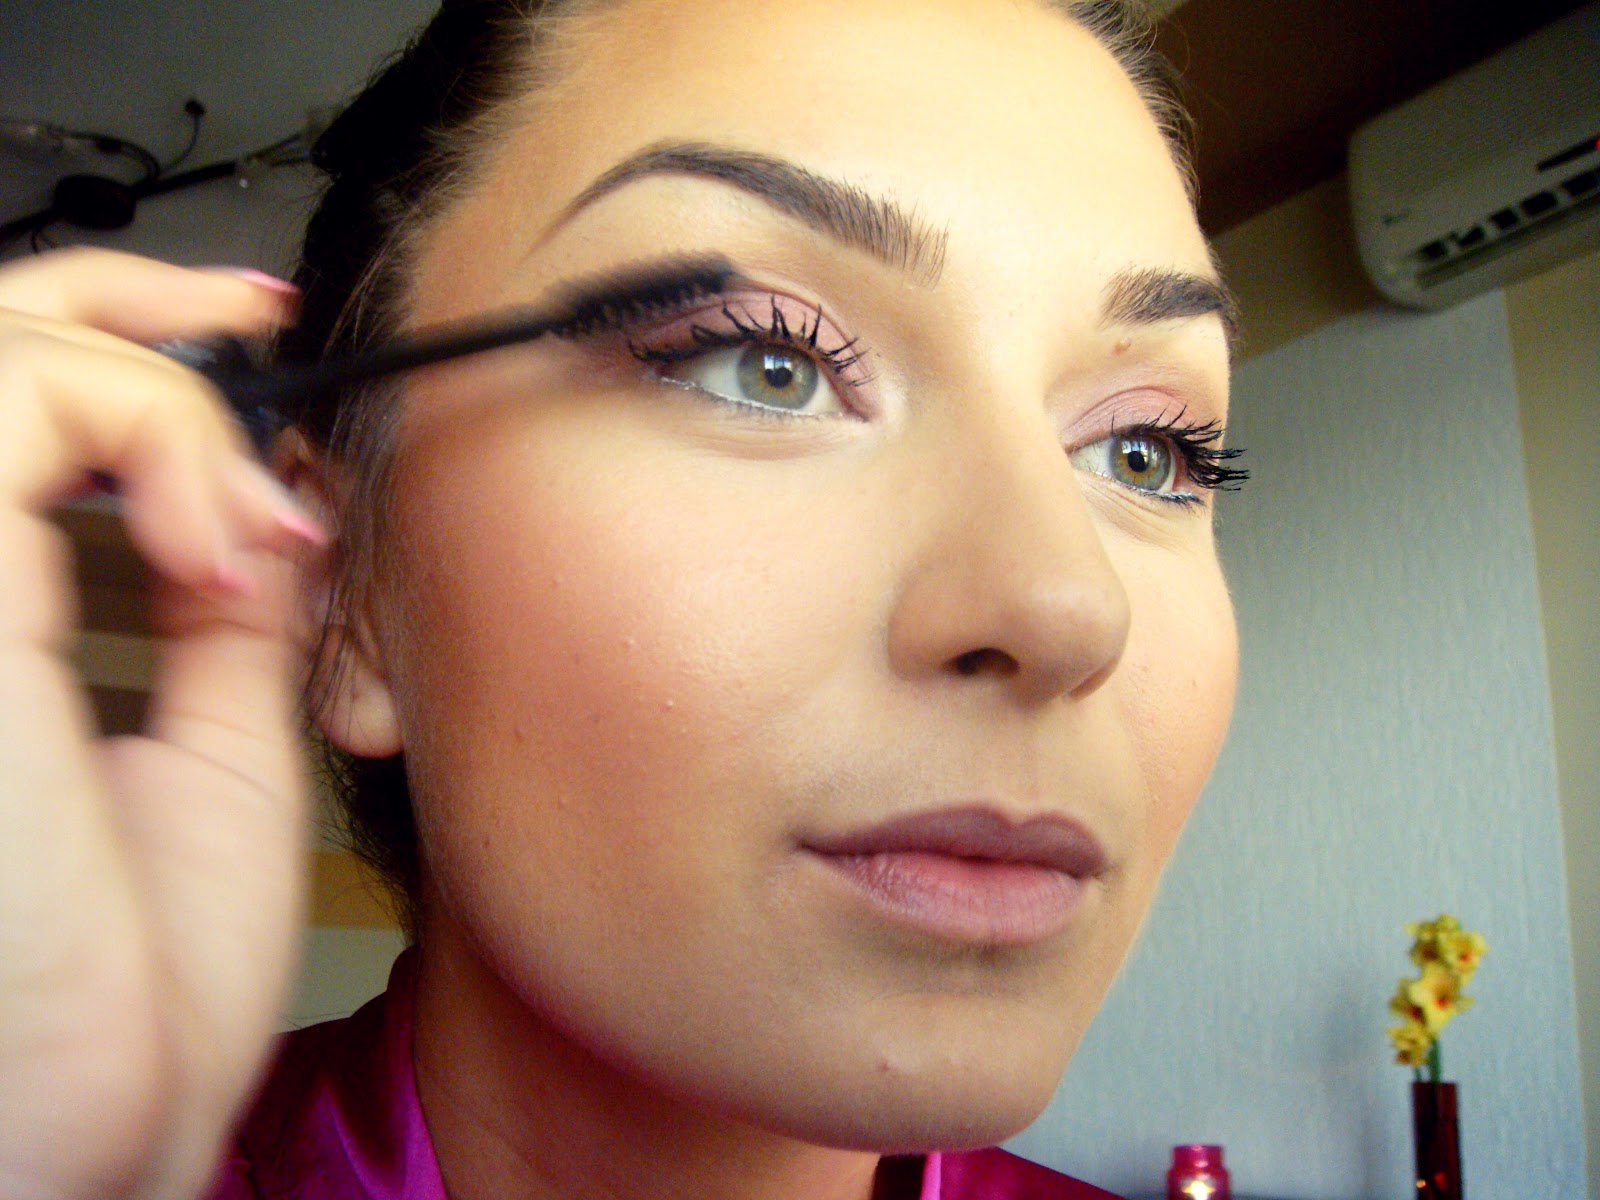 Lady applying makeup